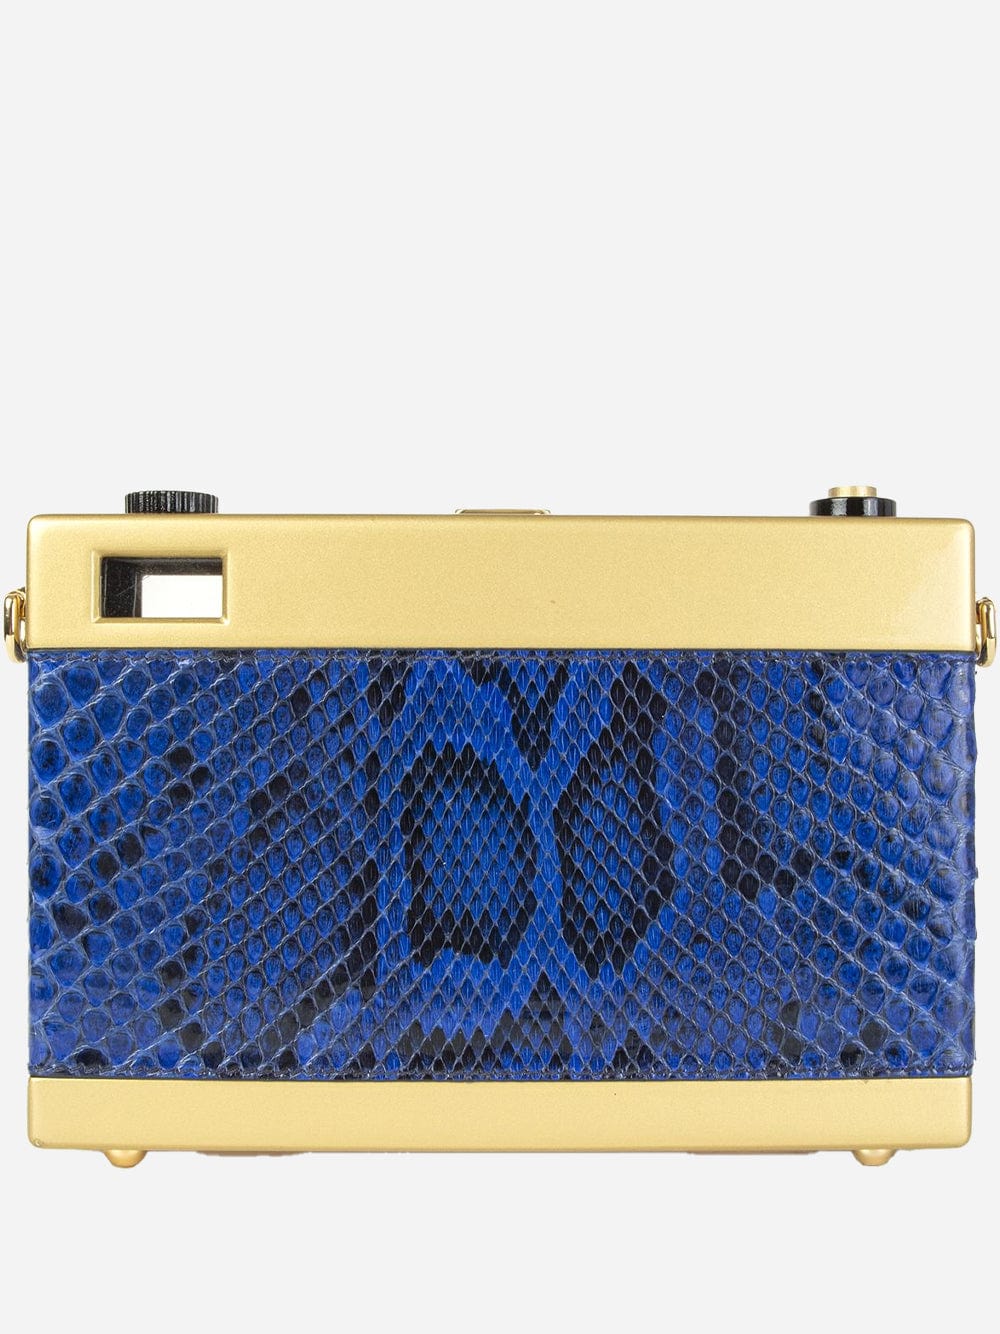 Dolce & Gabbana Ayers Padlock Camera Clutch Bag